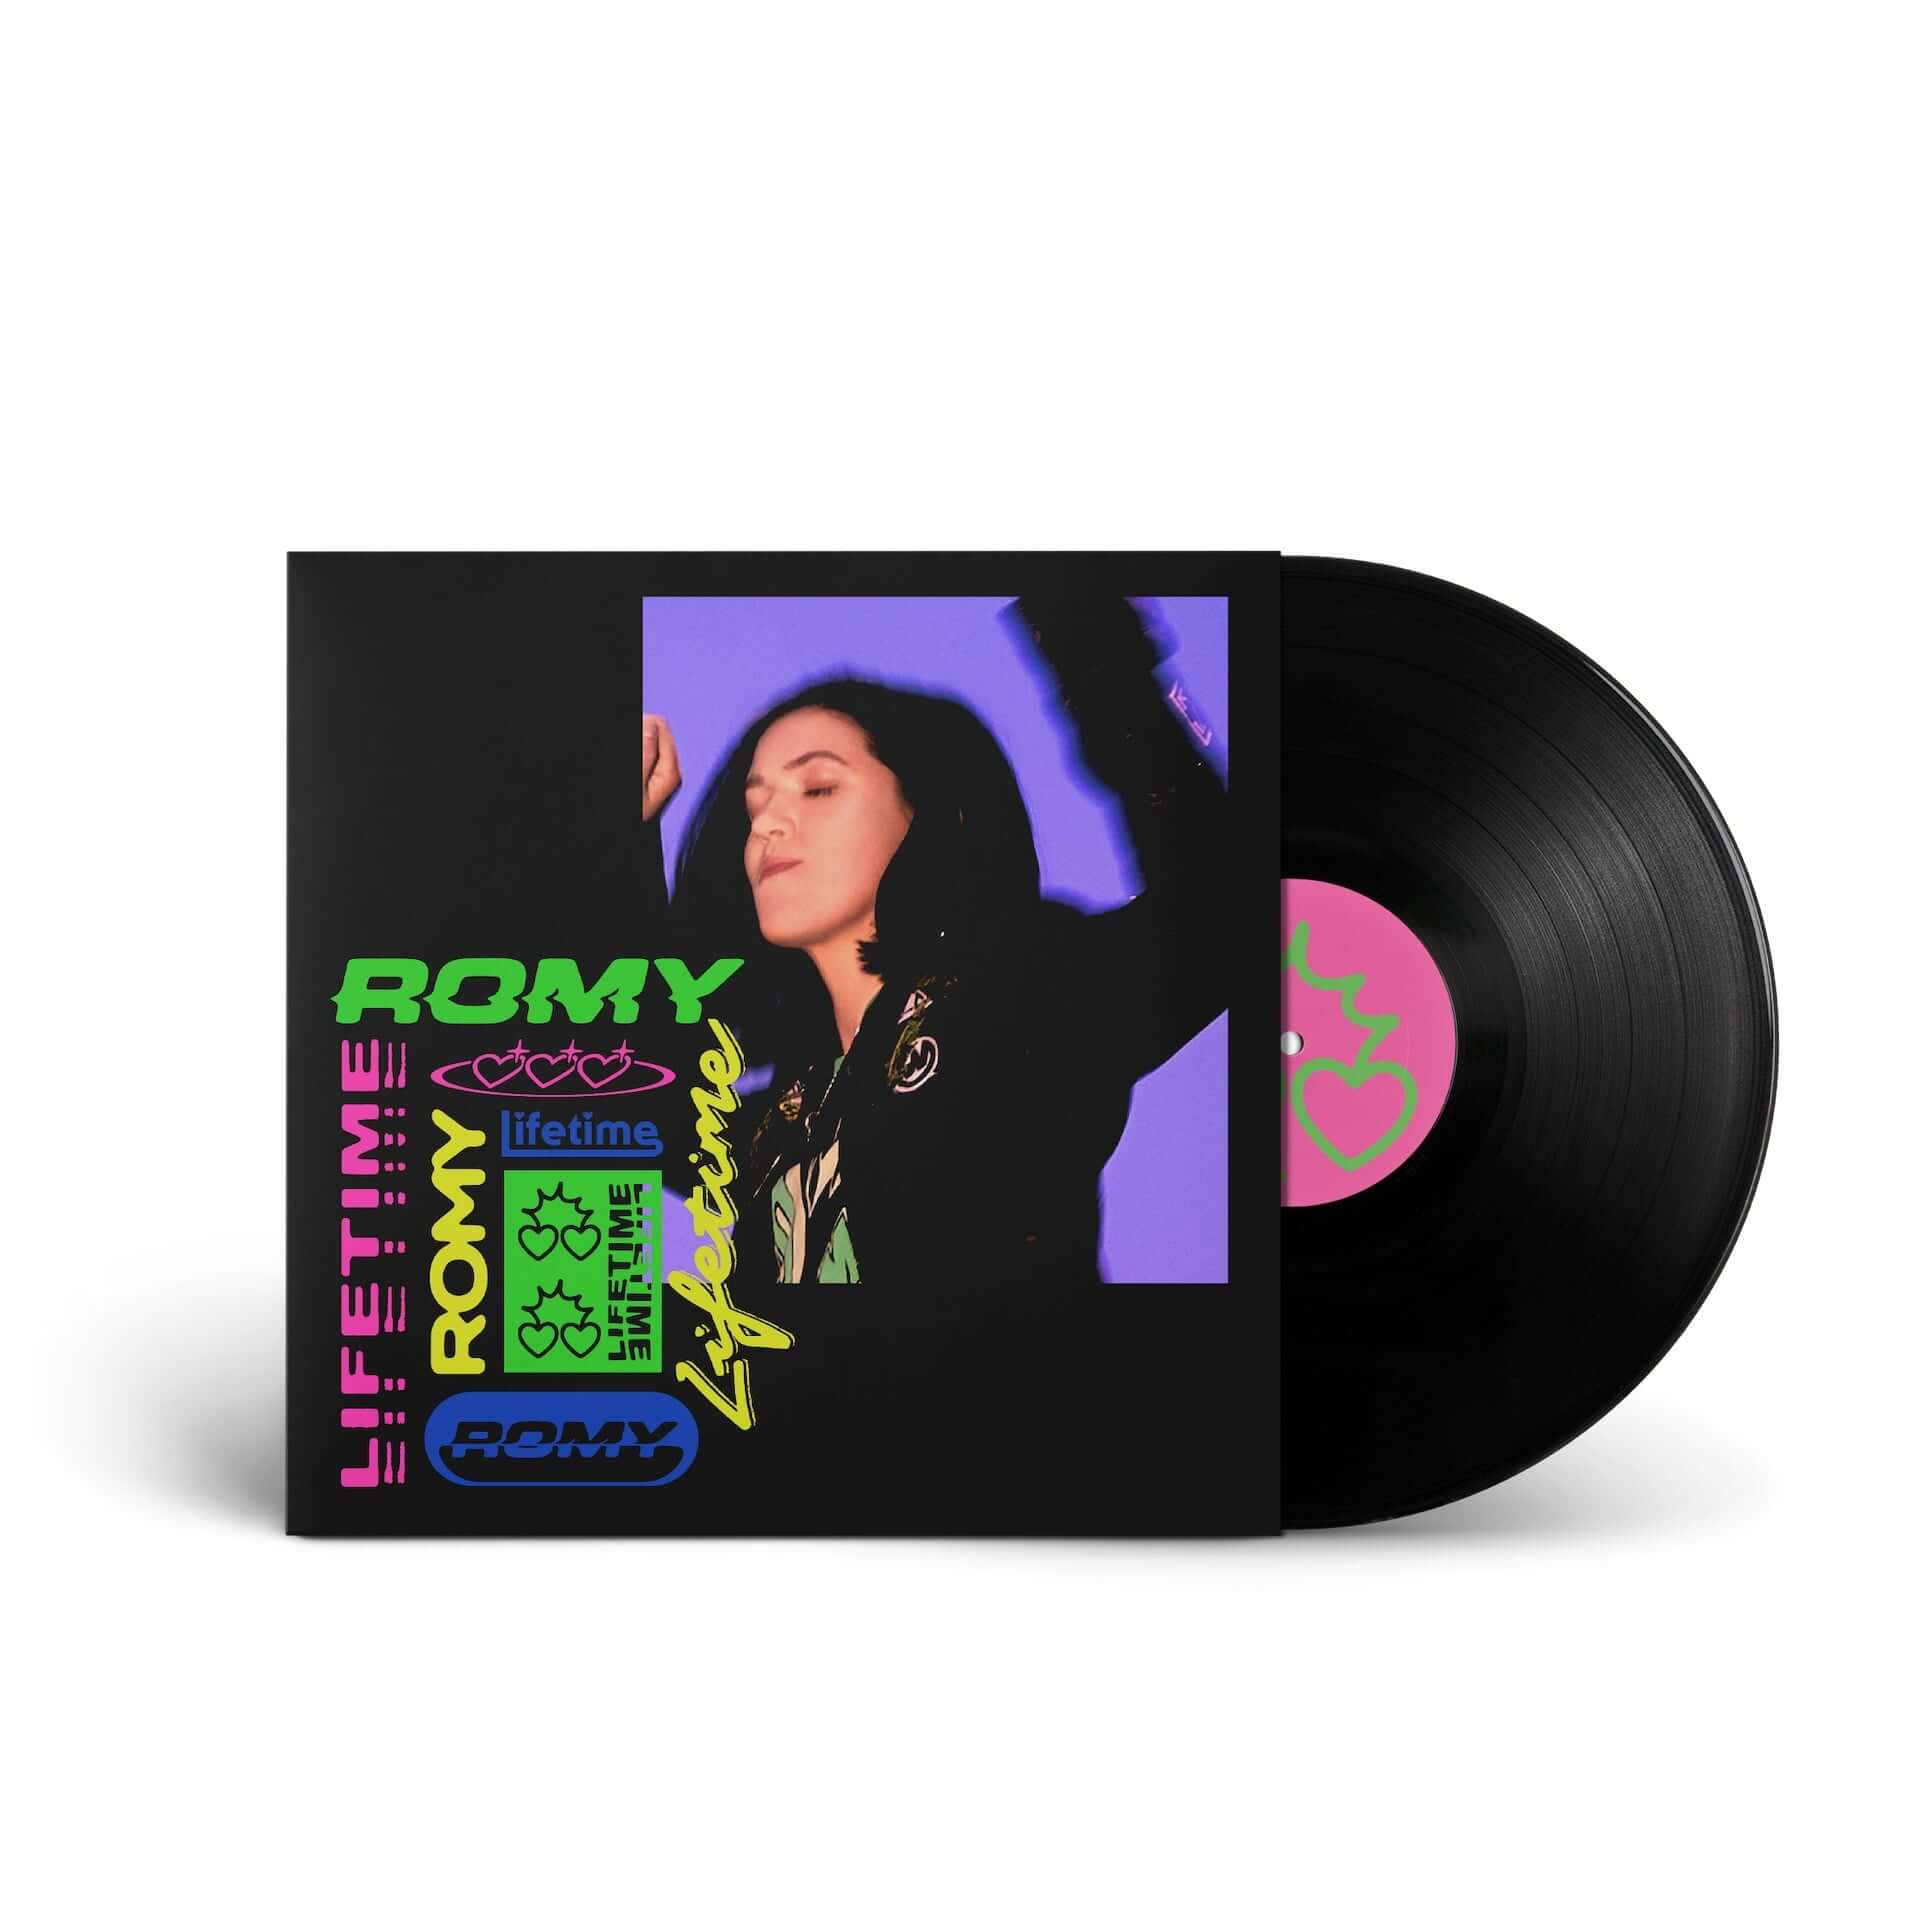 The xxのRomyがソロデビュー曲“Lifetime”のリミックス集をリリース！Jayda G、HAAi、Anz、Planningtorockが参加＆コメントも到着 music201203_romy_3-1920x1920